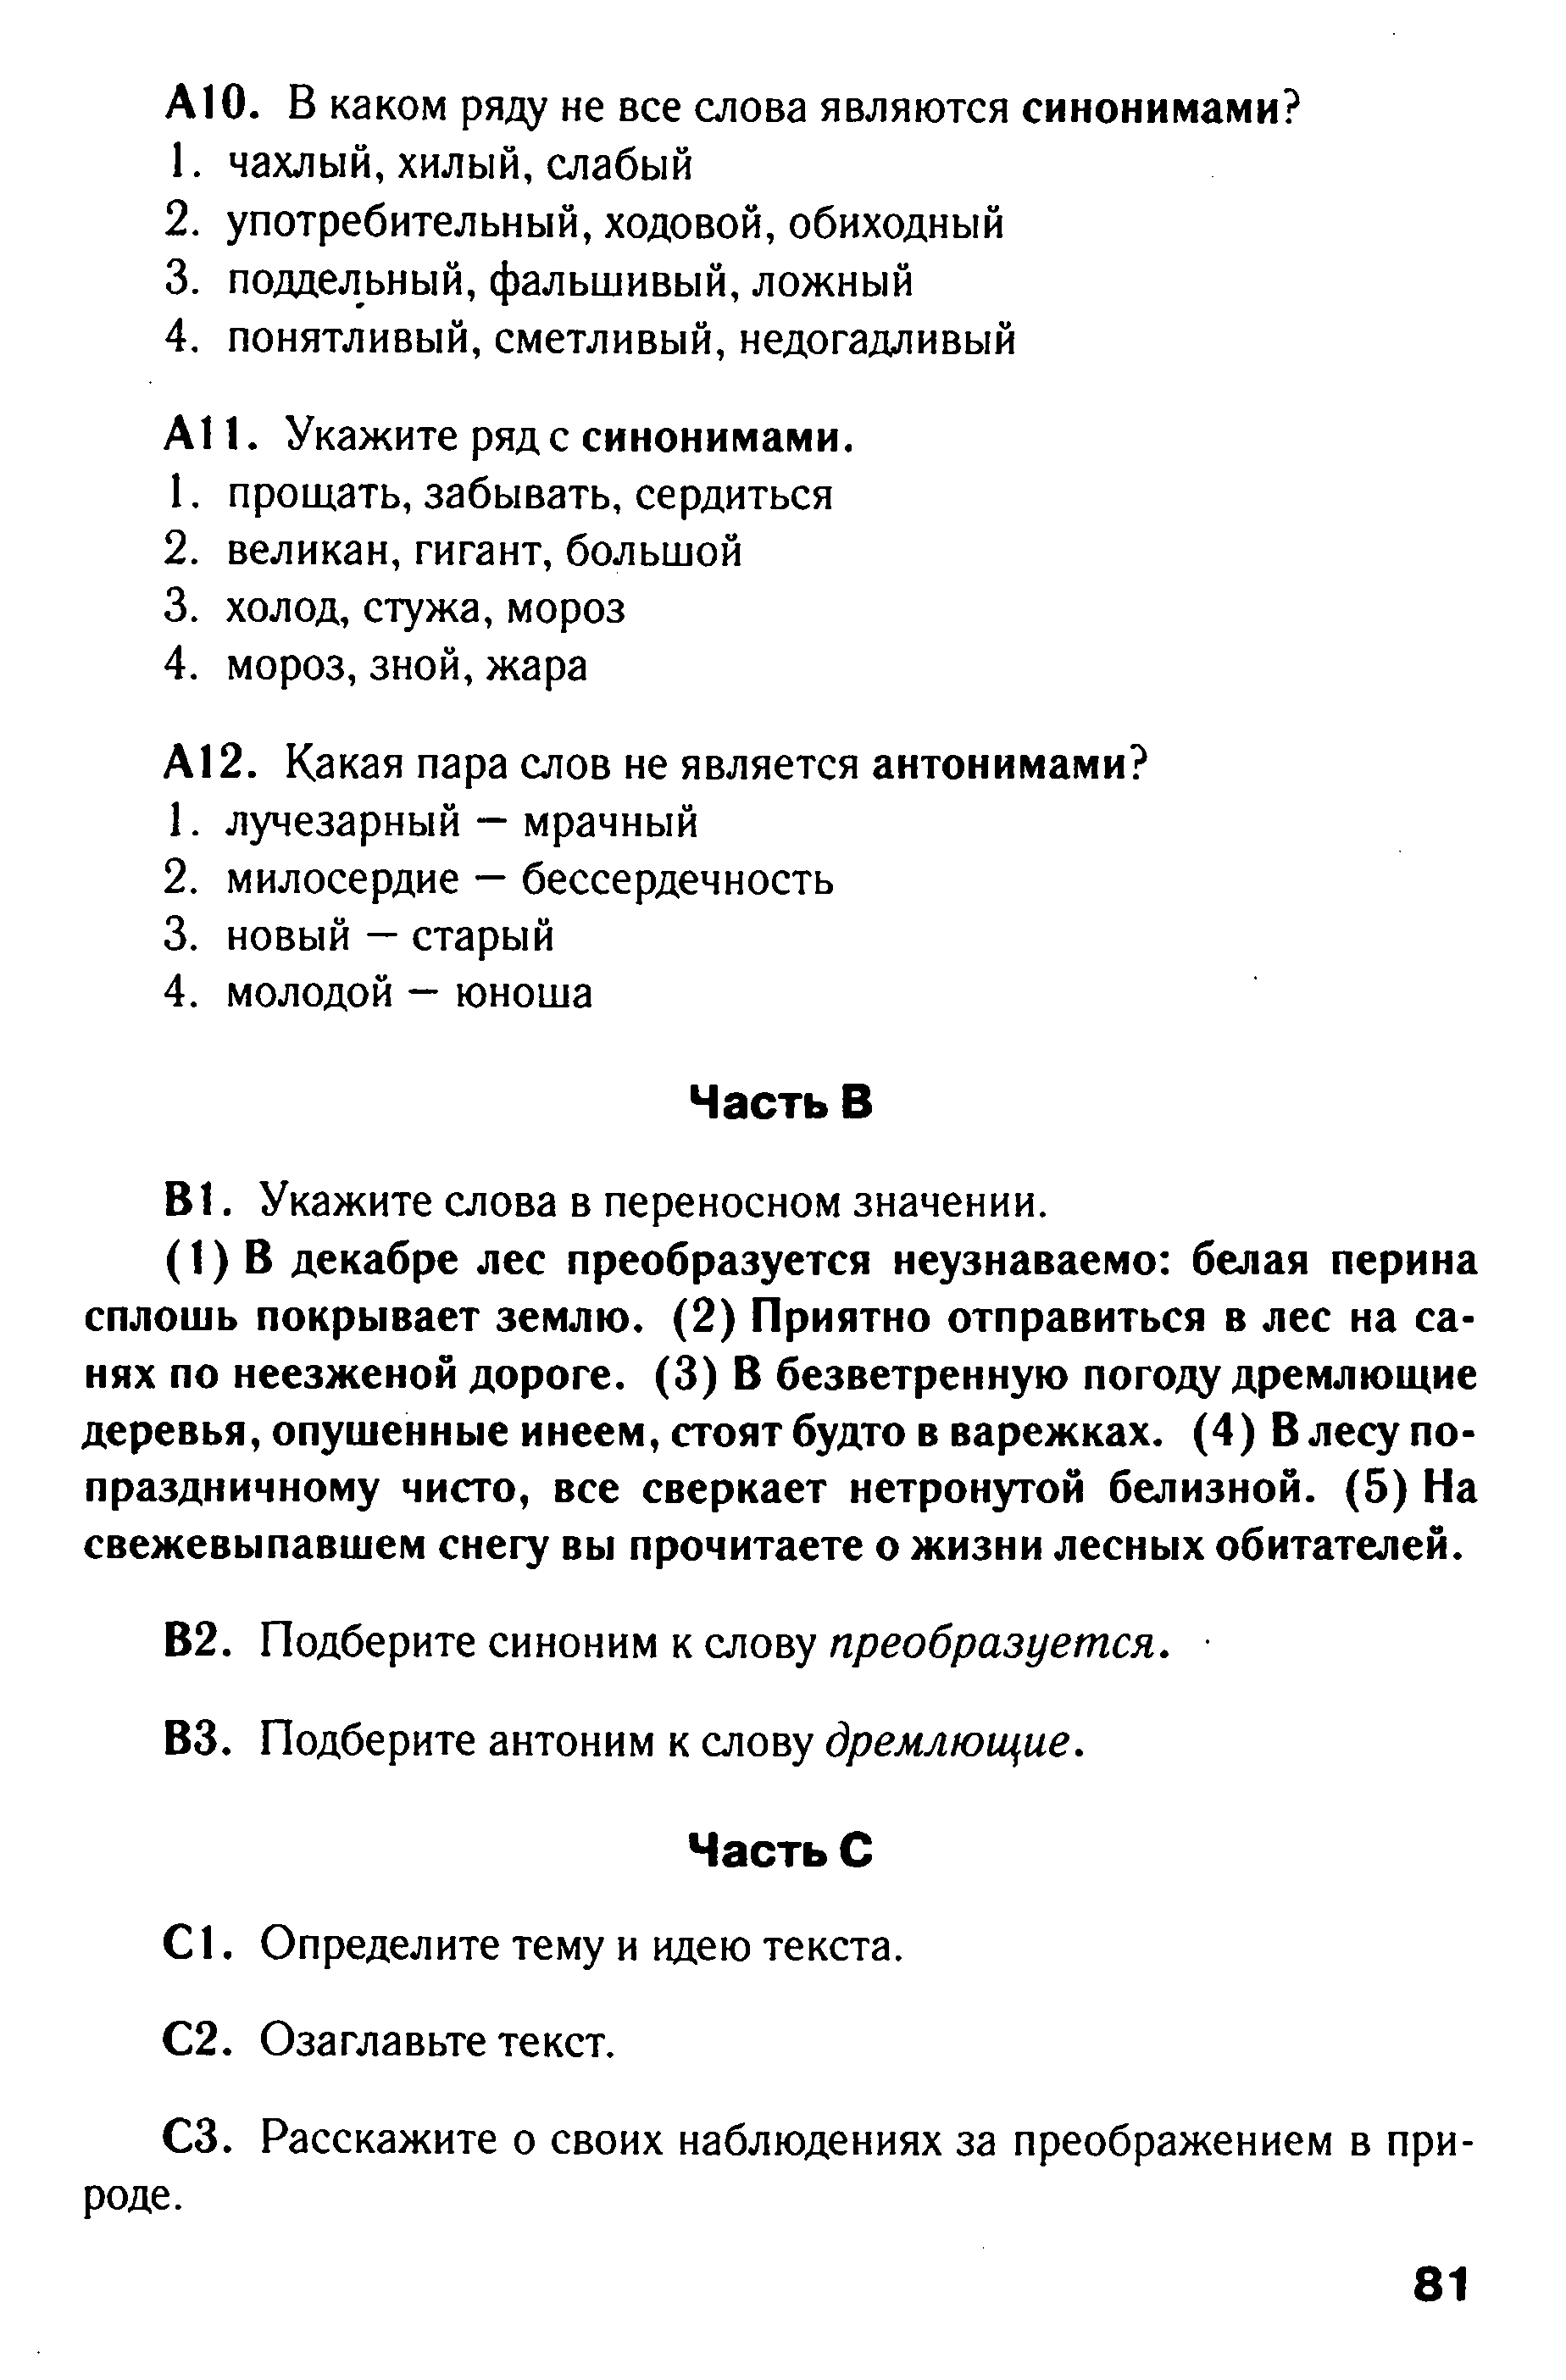 Тест по русскому языку в формате ГИА на тему Лексика. Культура речи вариант 2 (5 класс)